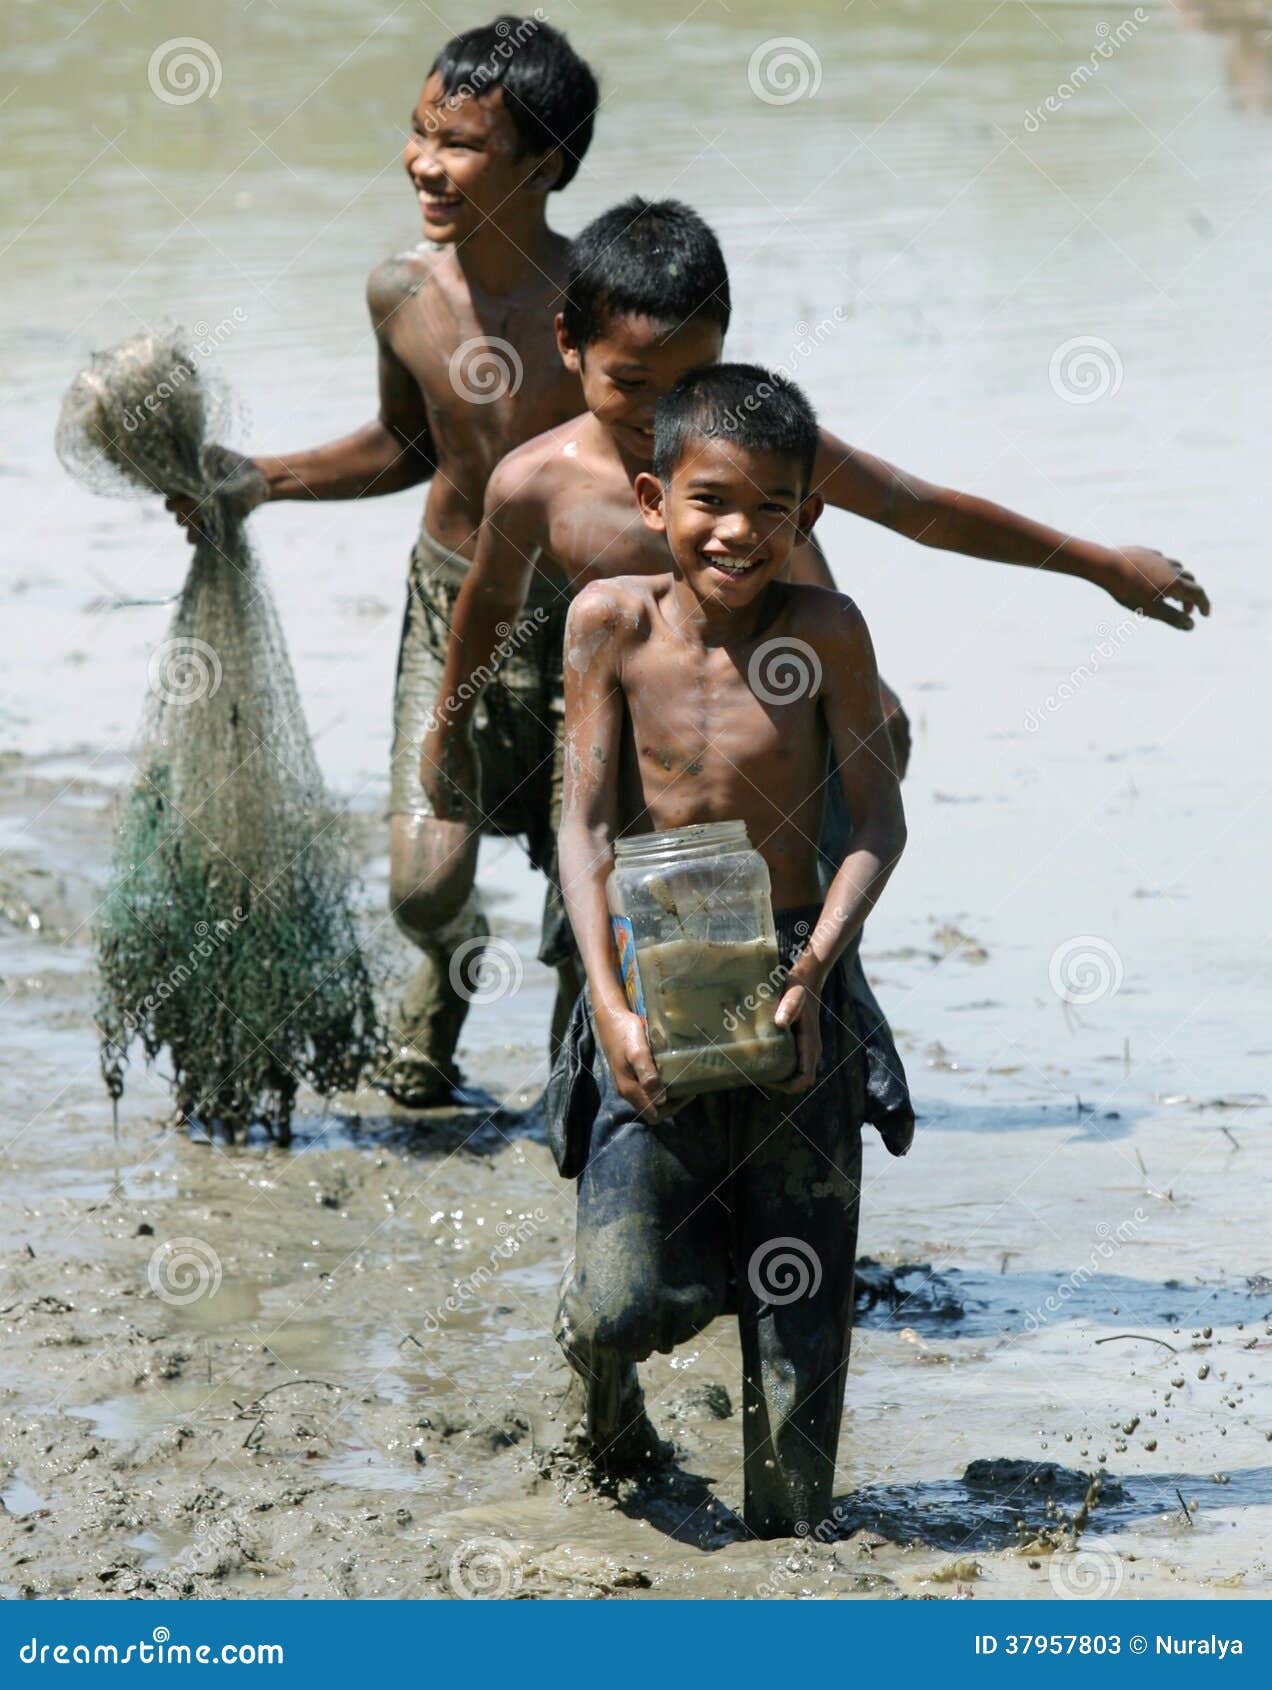 967 Child Fish Net Stock Photos - Free & Royalty-Free Stock Photos